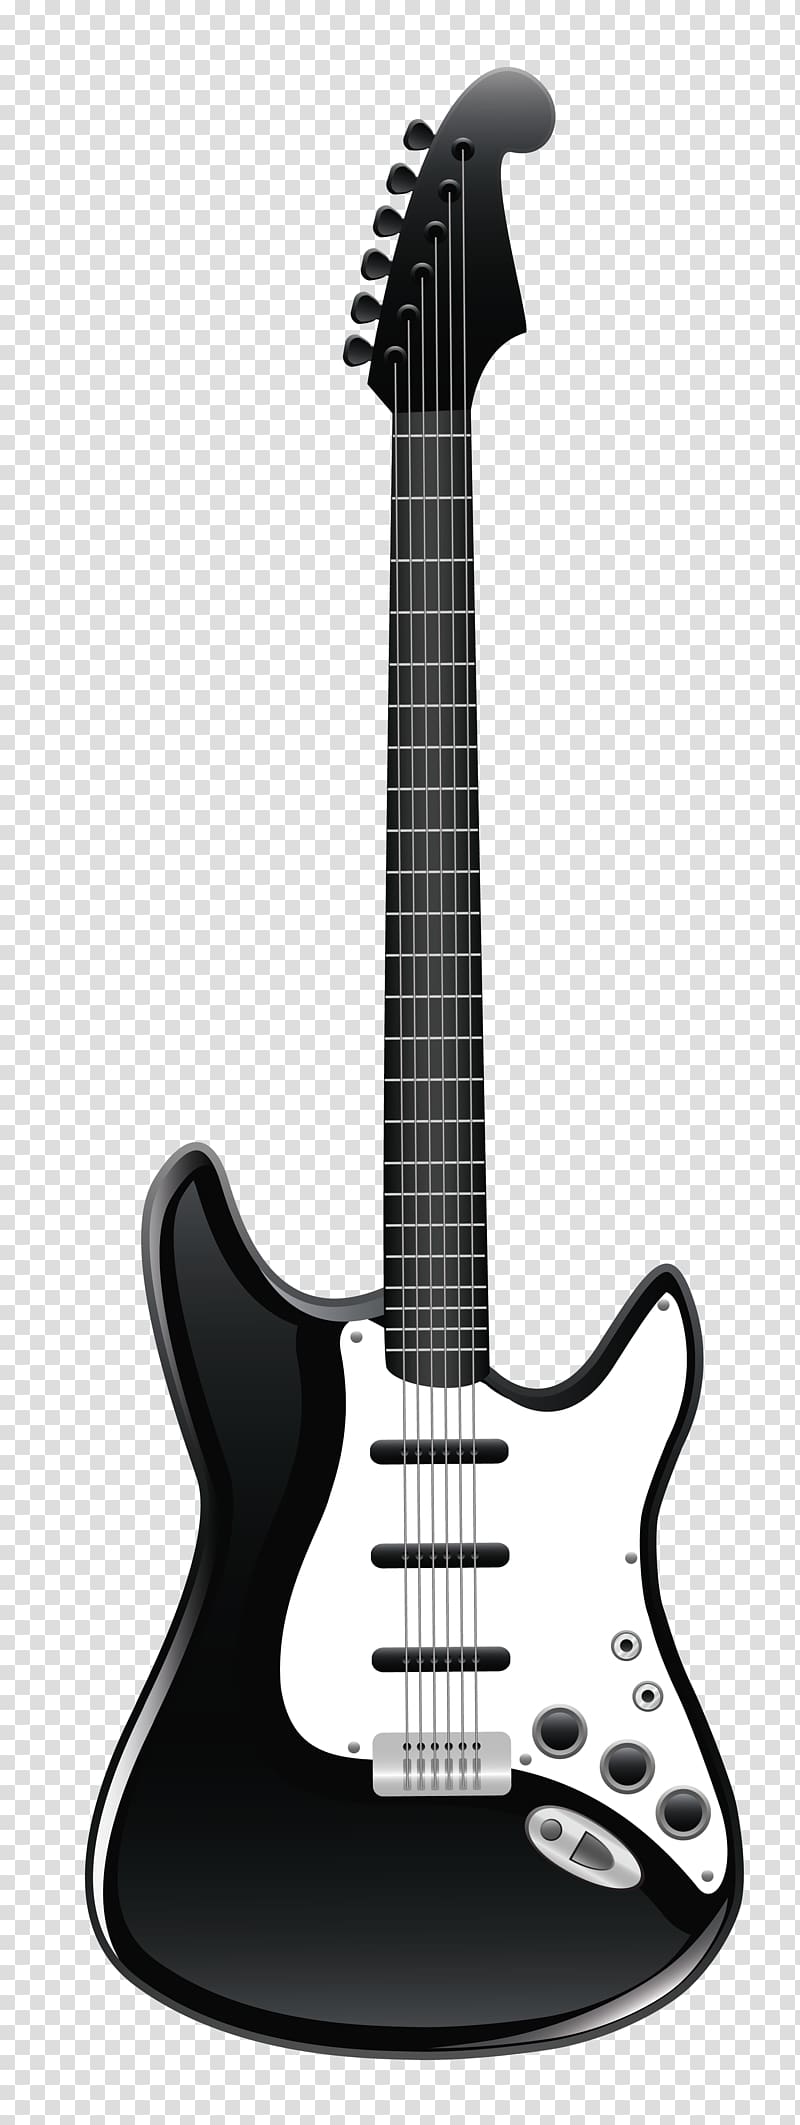 Guitar , Black and White Guitar , black and white stratocaster electric guitar illustration transparent background PNG clipart